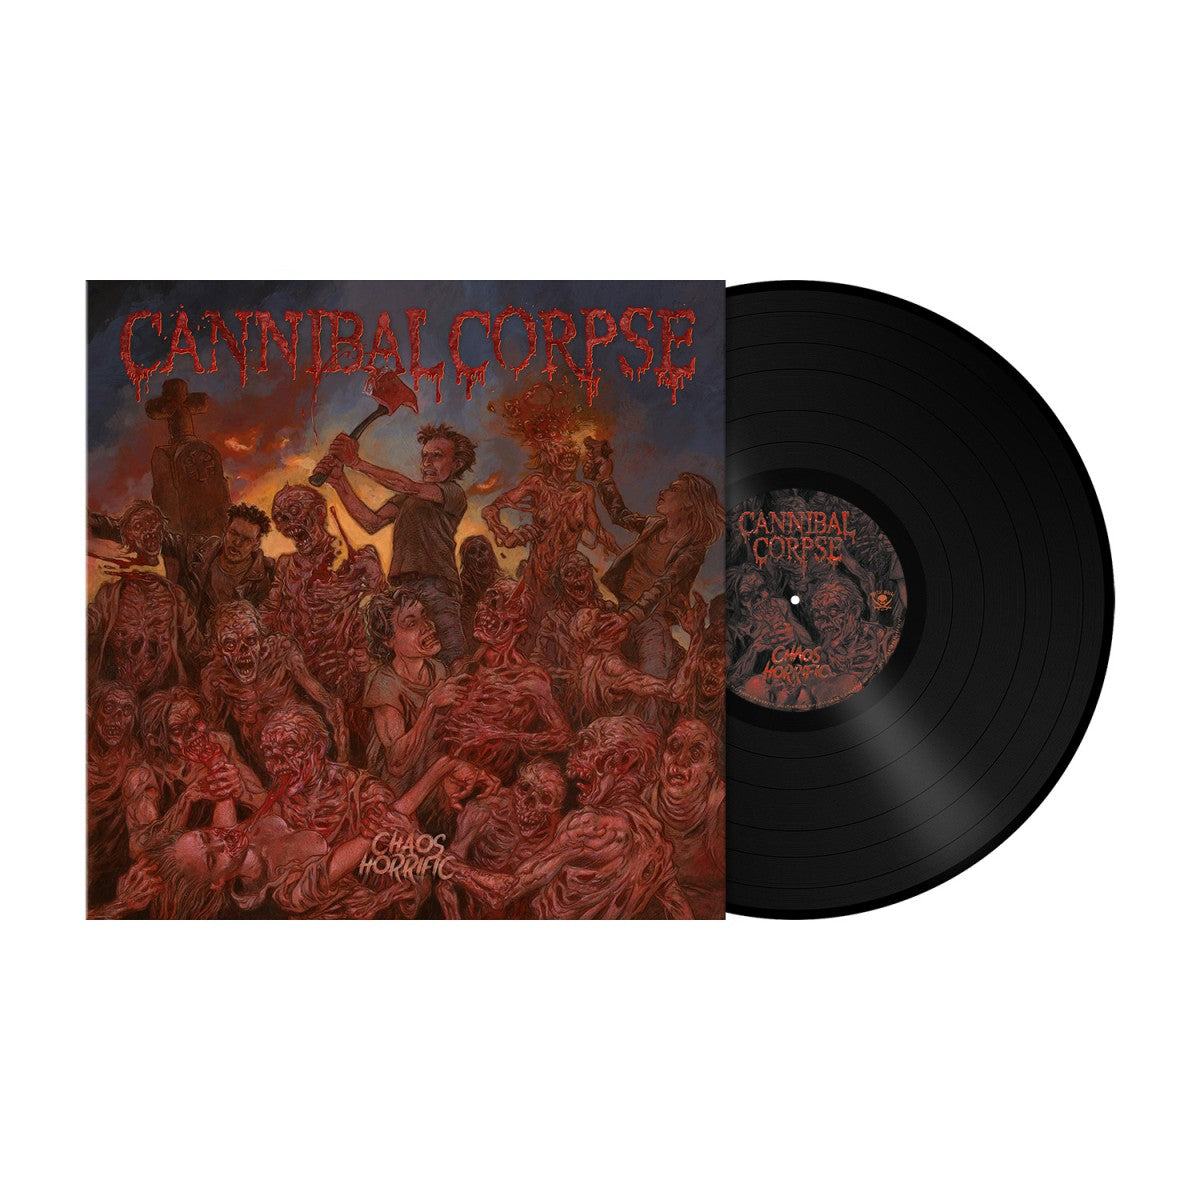 Cannibal Corpse "Chaos Horrific" 180g Black Vinyl